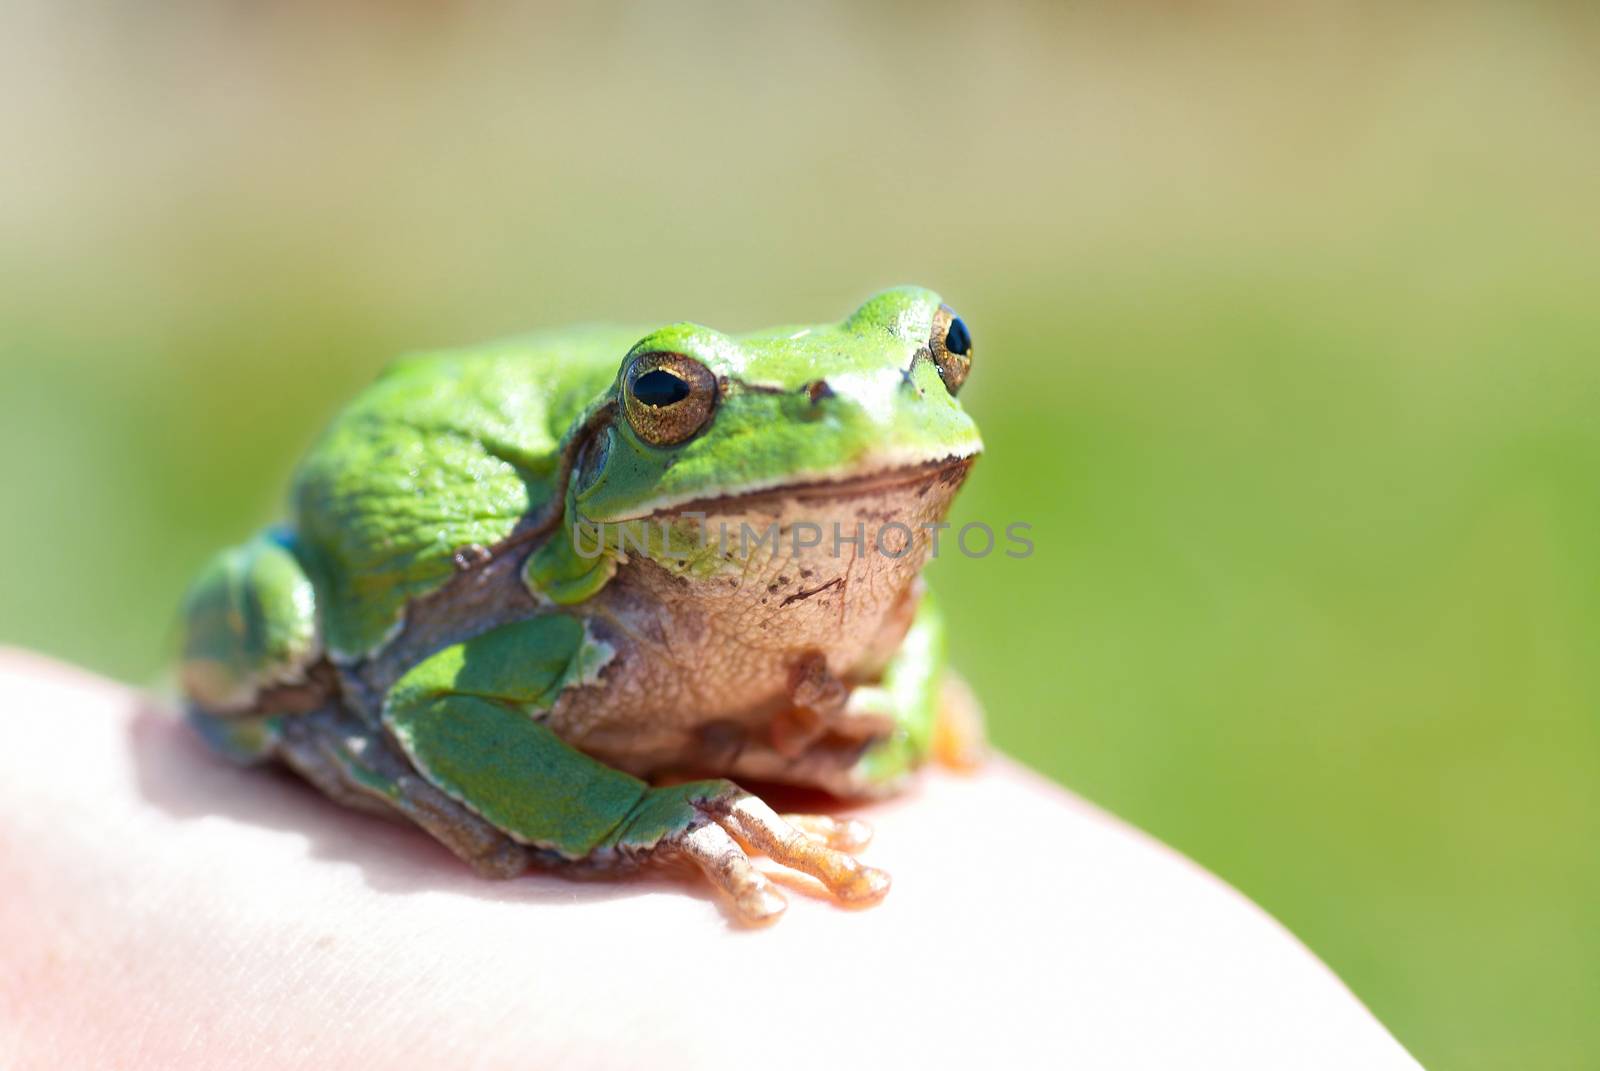 Green frog by vapi